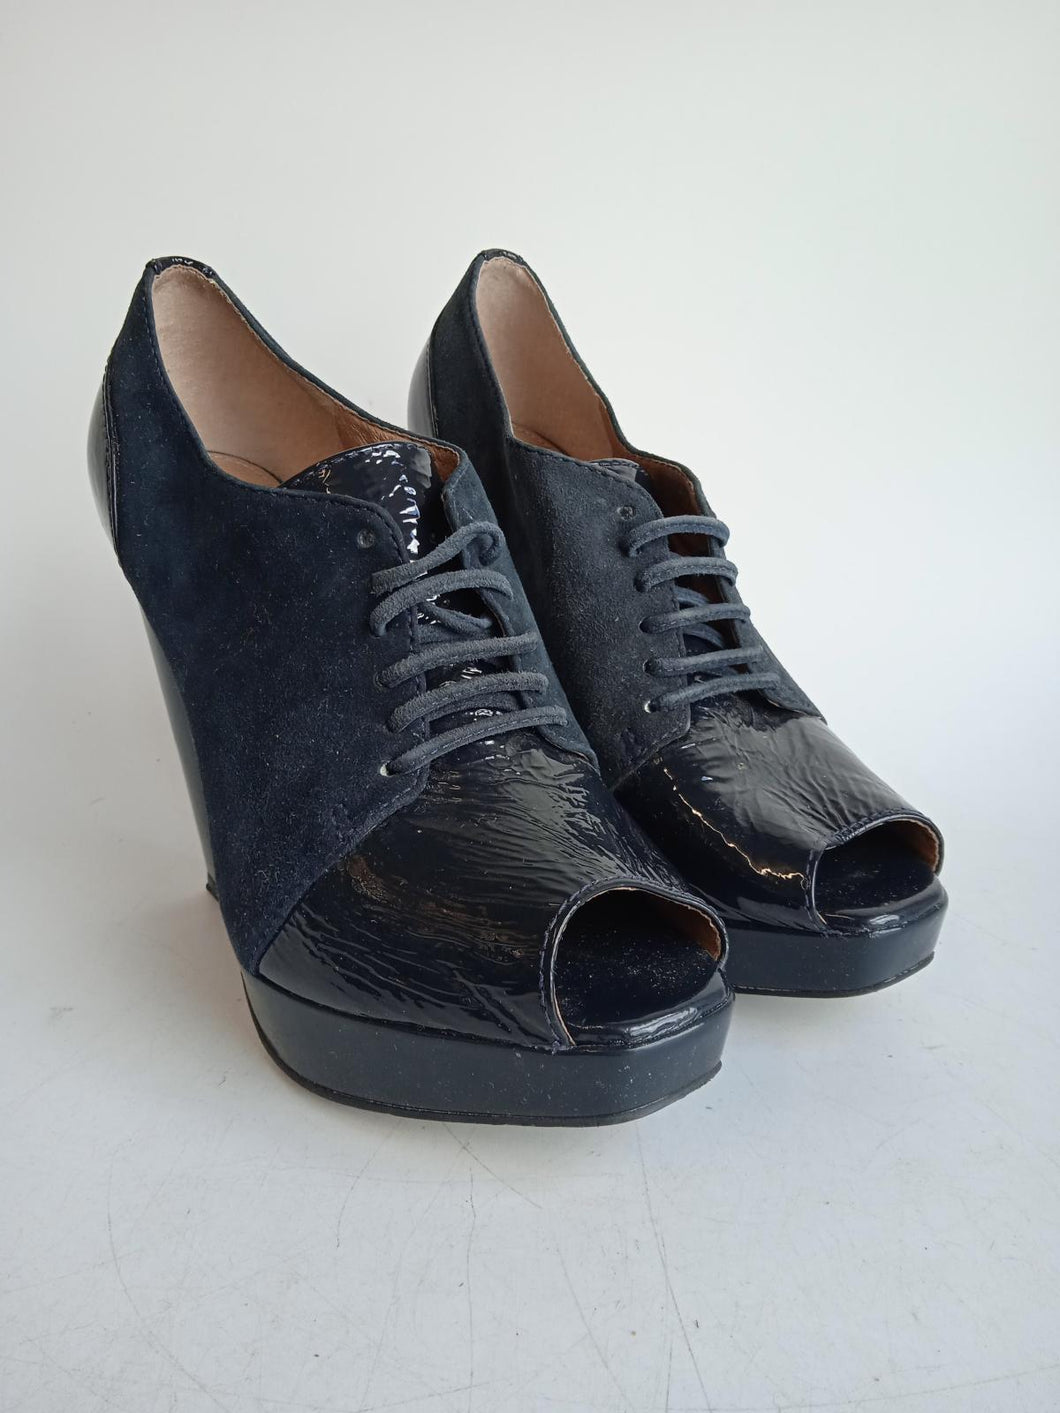 TOPSHOP Ladies Blue Suede & Patent Leather Peep Toe High Heel Shoes EU37 UK4